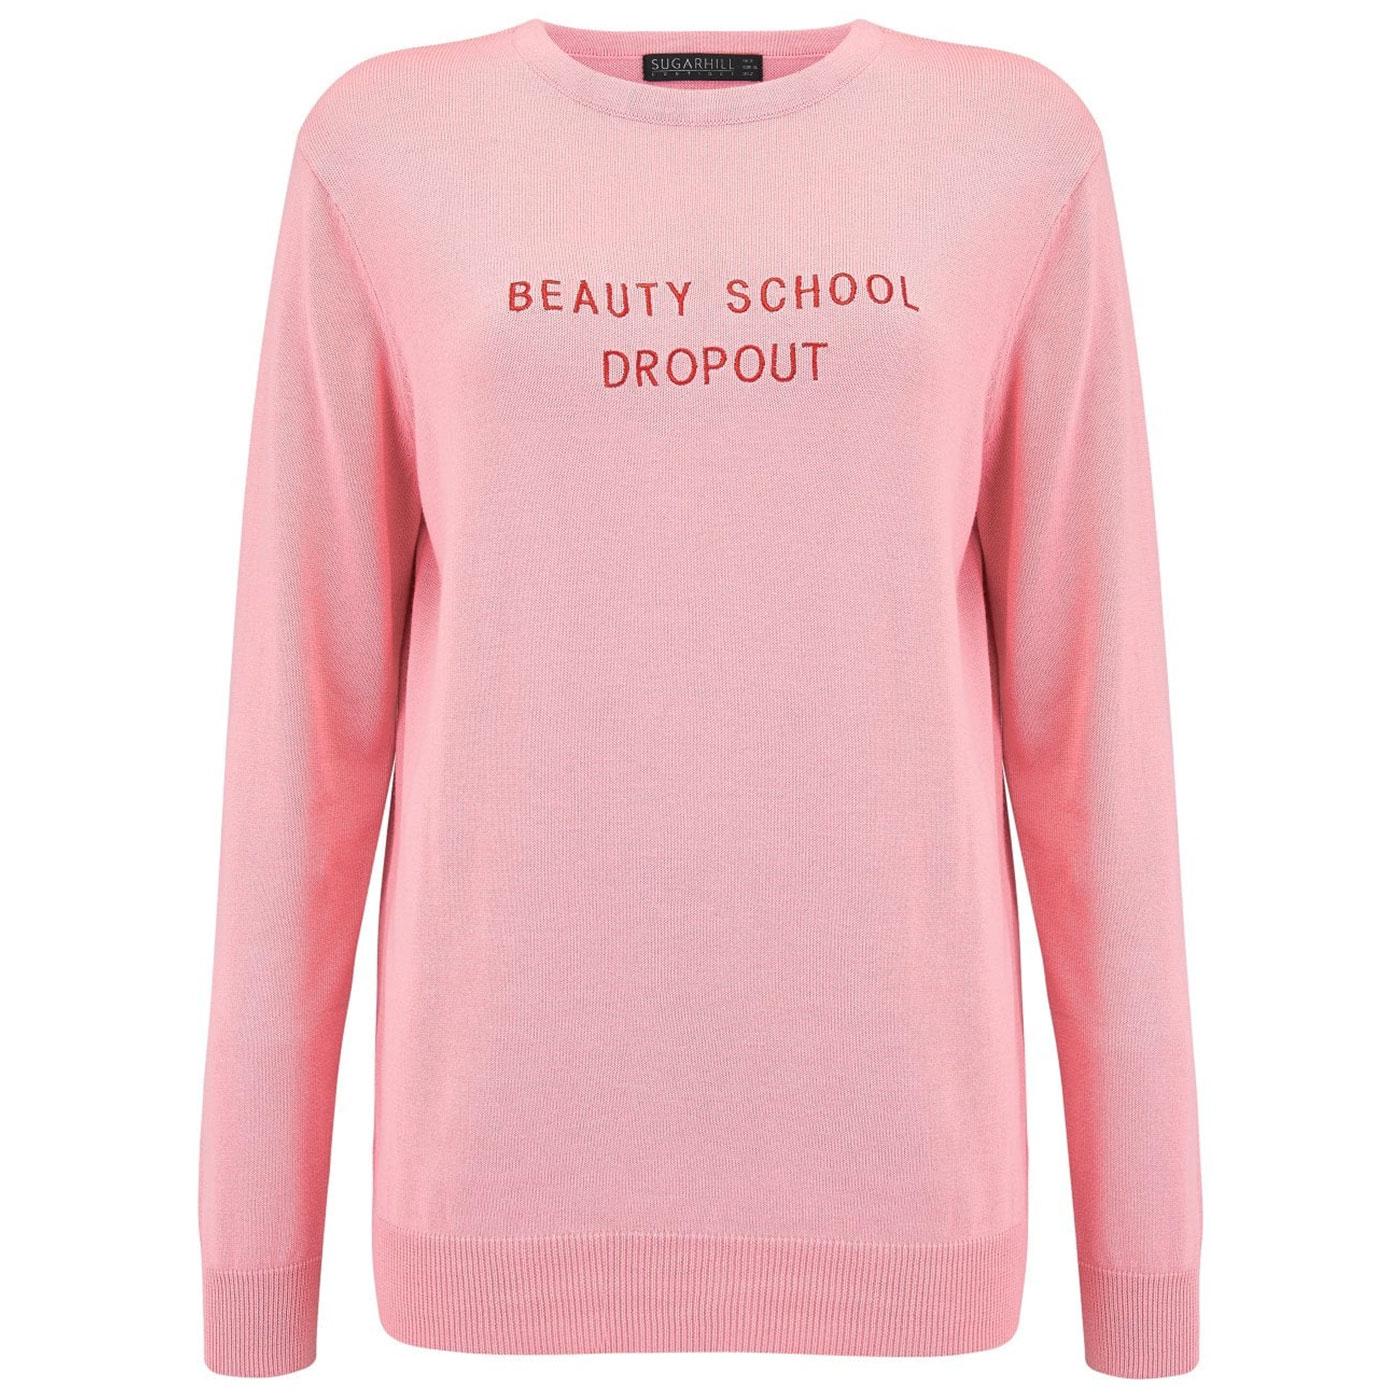 Beauty School Dropout SUGARHILL BOUTIQUE Sweater